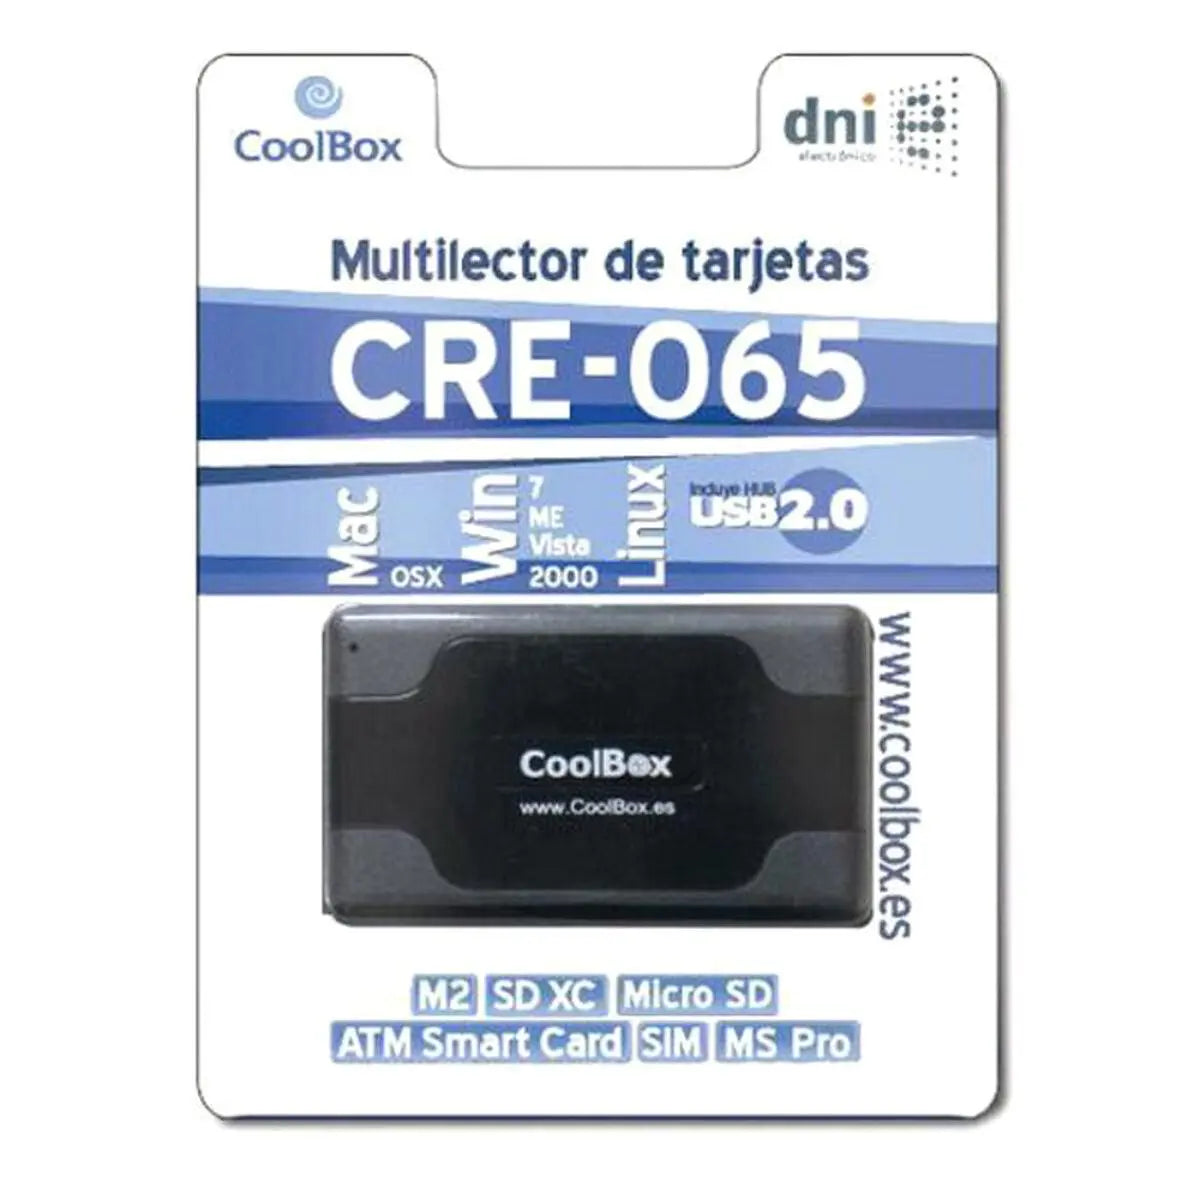 External Card Reader CoolBox CRE-065A Black - IGSI Europe Ltd